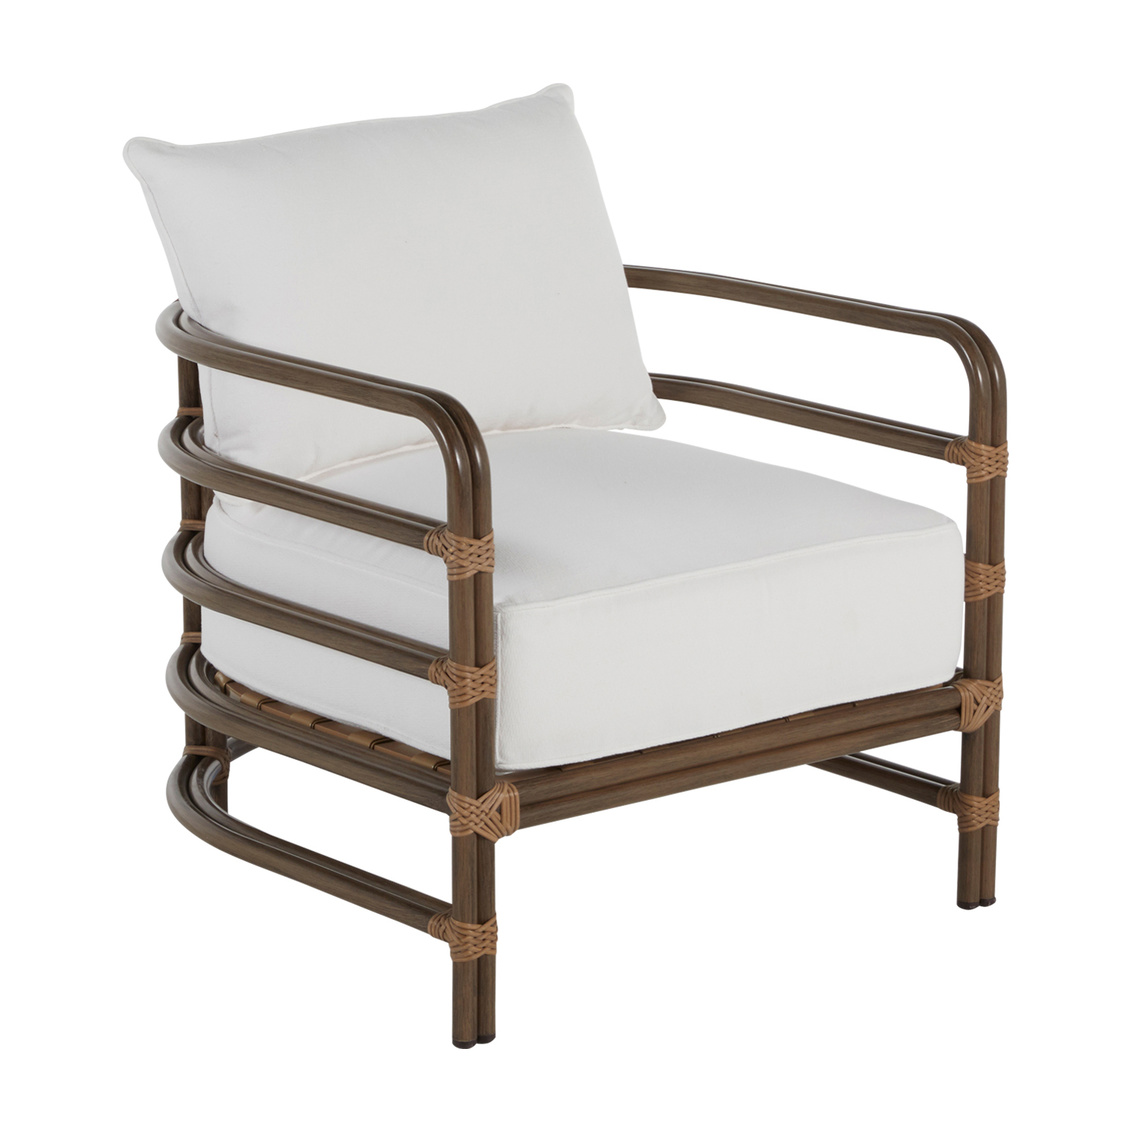 malibu barrel chair in burlap/oak – frame only product image